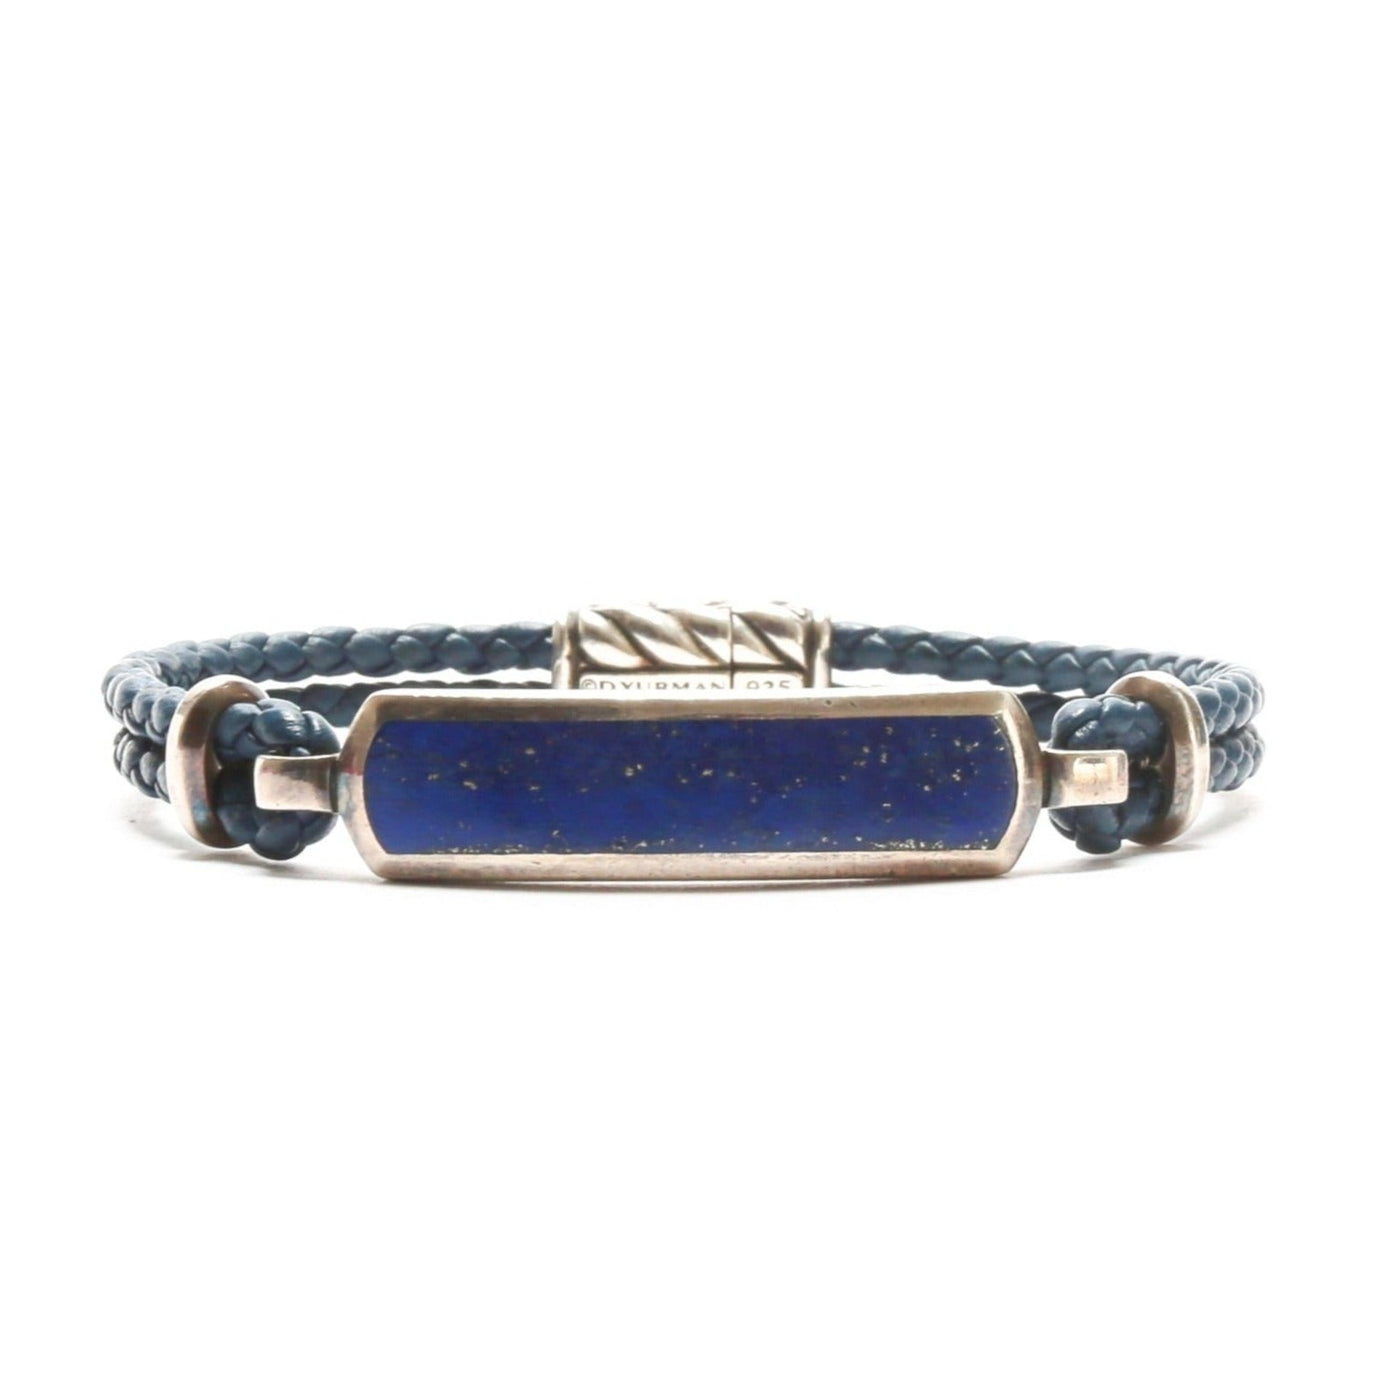 DAVID YURMAN Blue Leather ID Bracelet - FINAL SALE